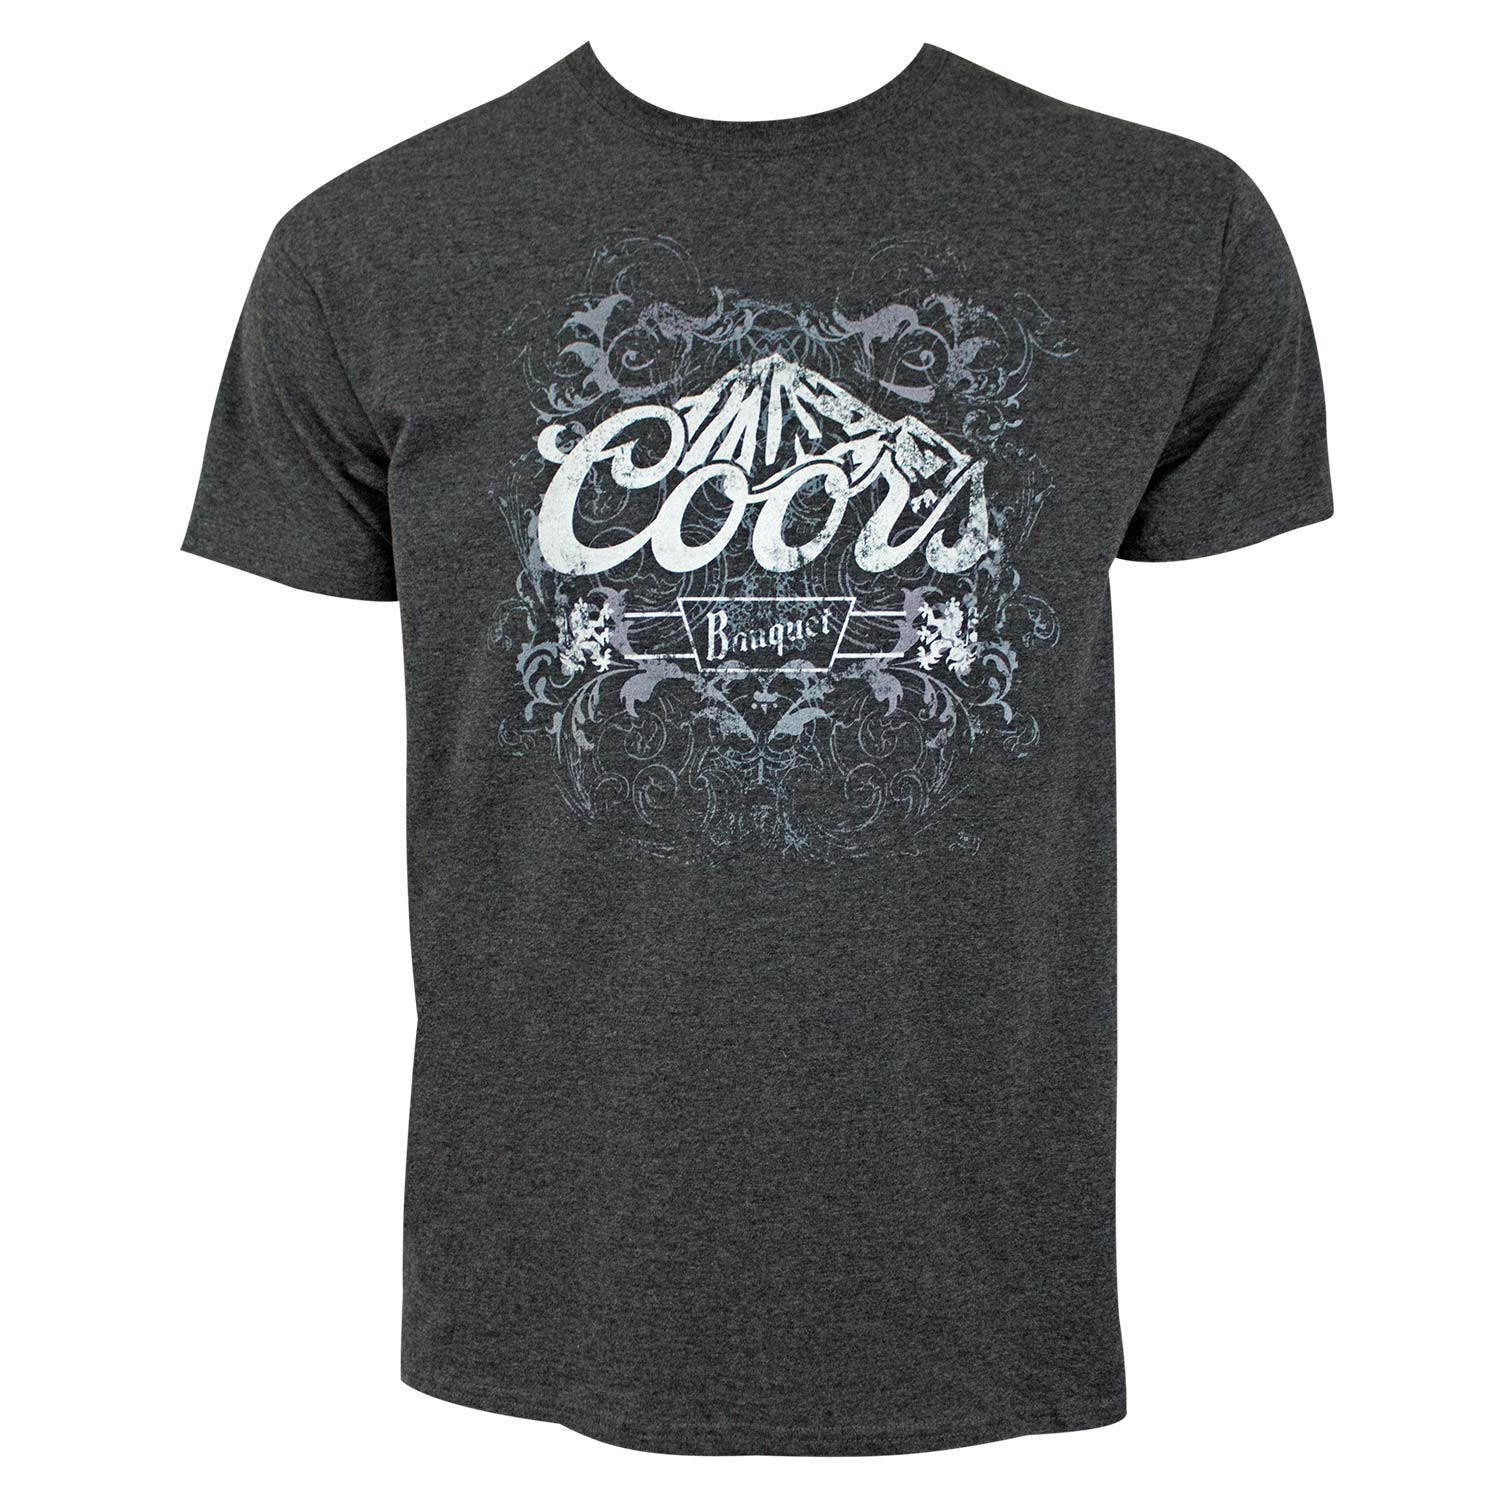 Coors Banquet Mountains Charcoal Gray Men's T-Shirt